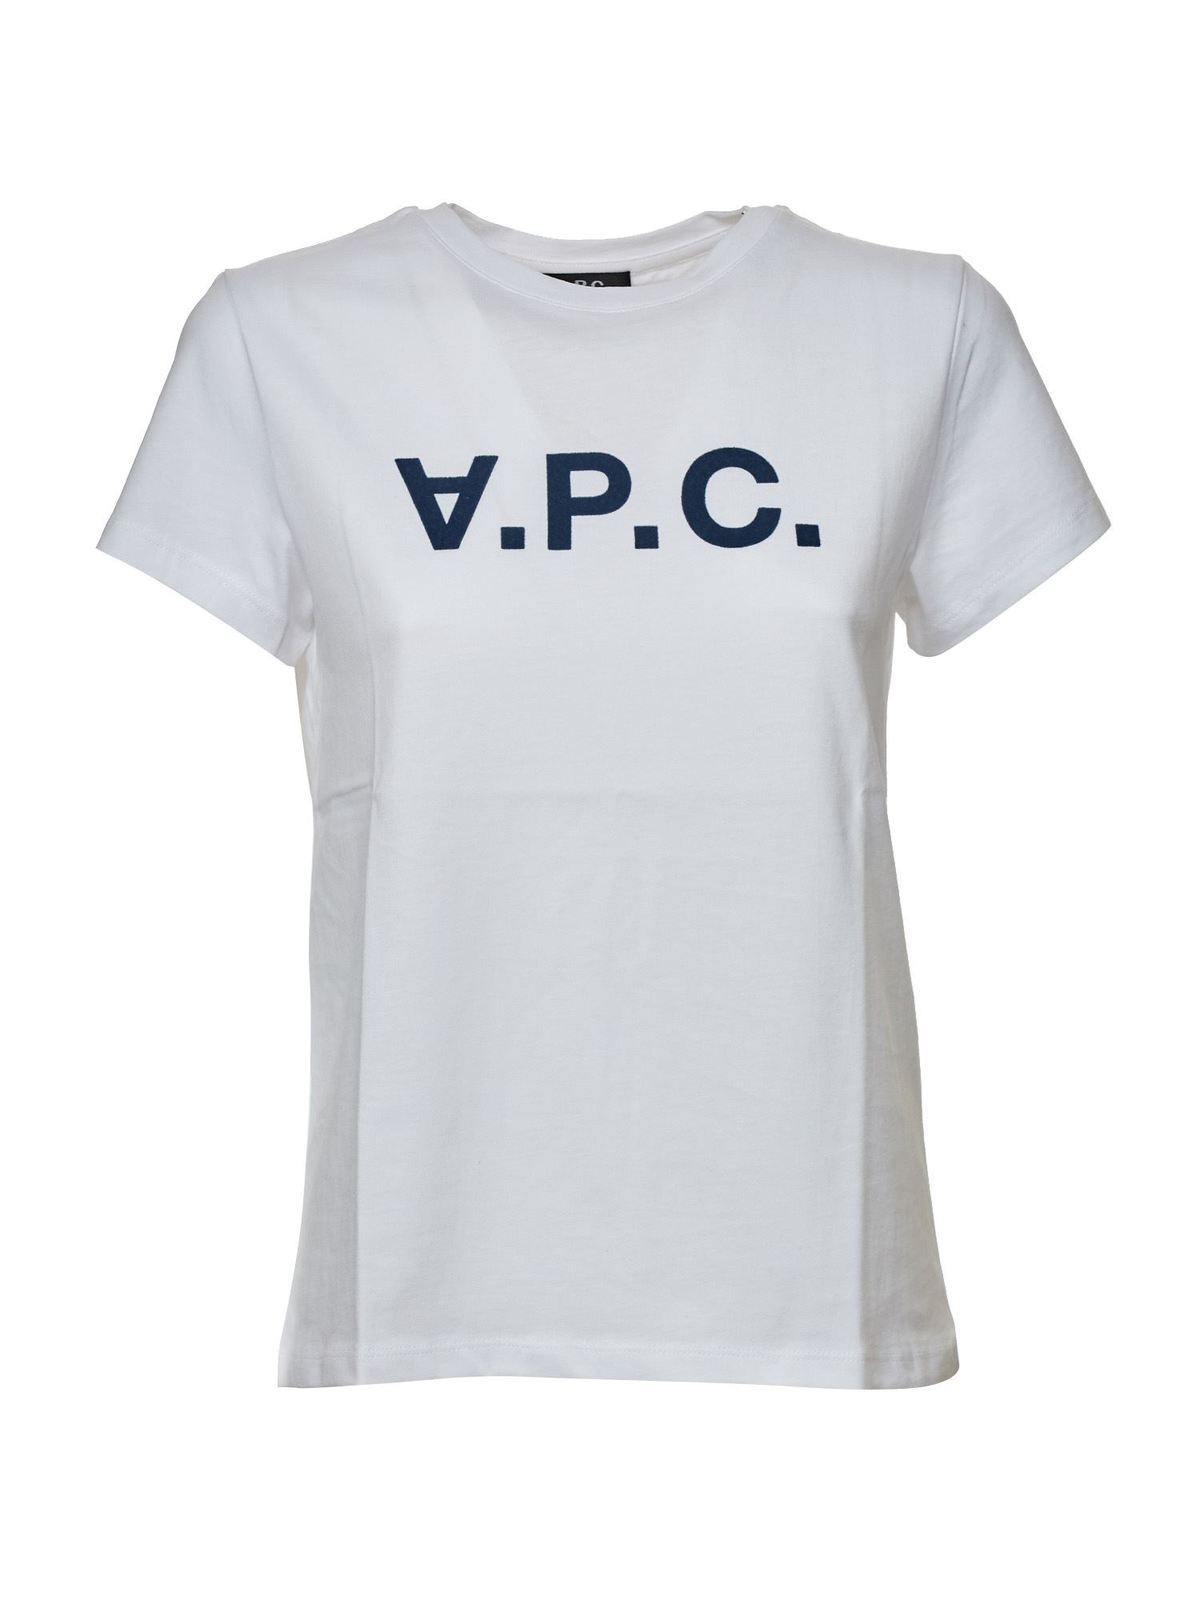 T-shirts A.P.C. - Logo t-shirt in white and blue - COBQXF26588 | iKRIX.com